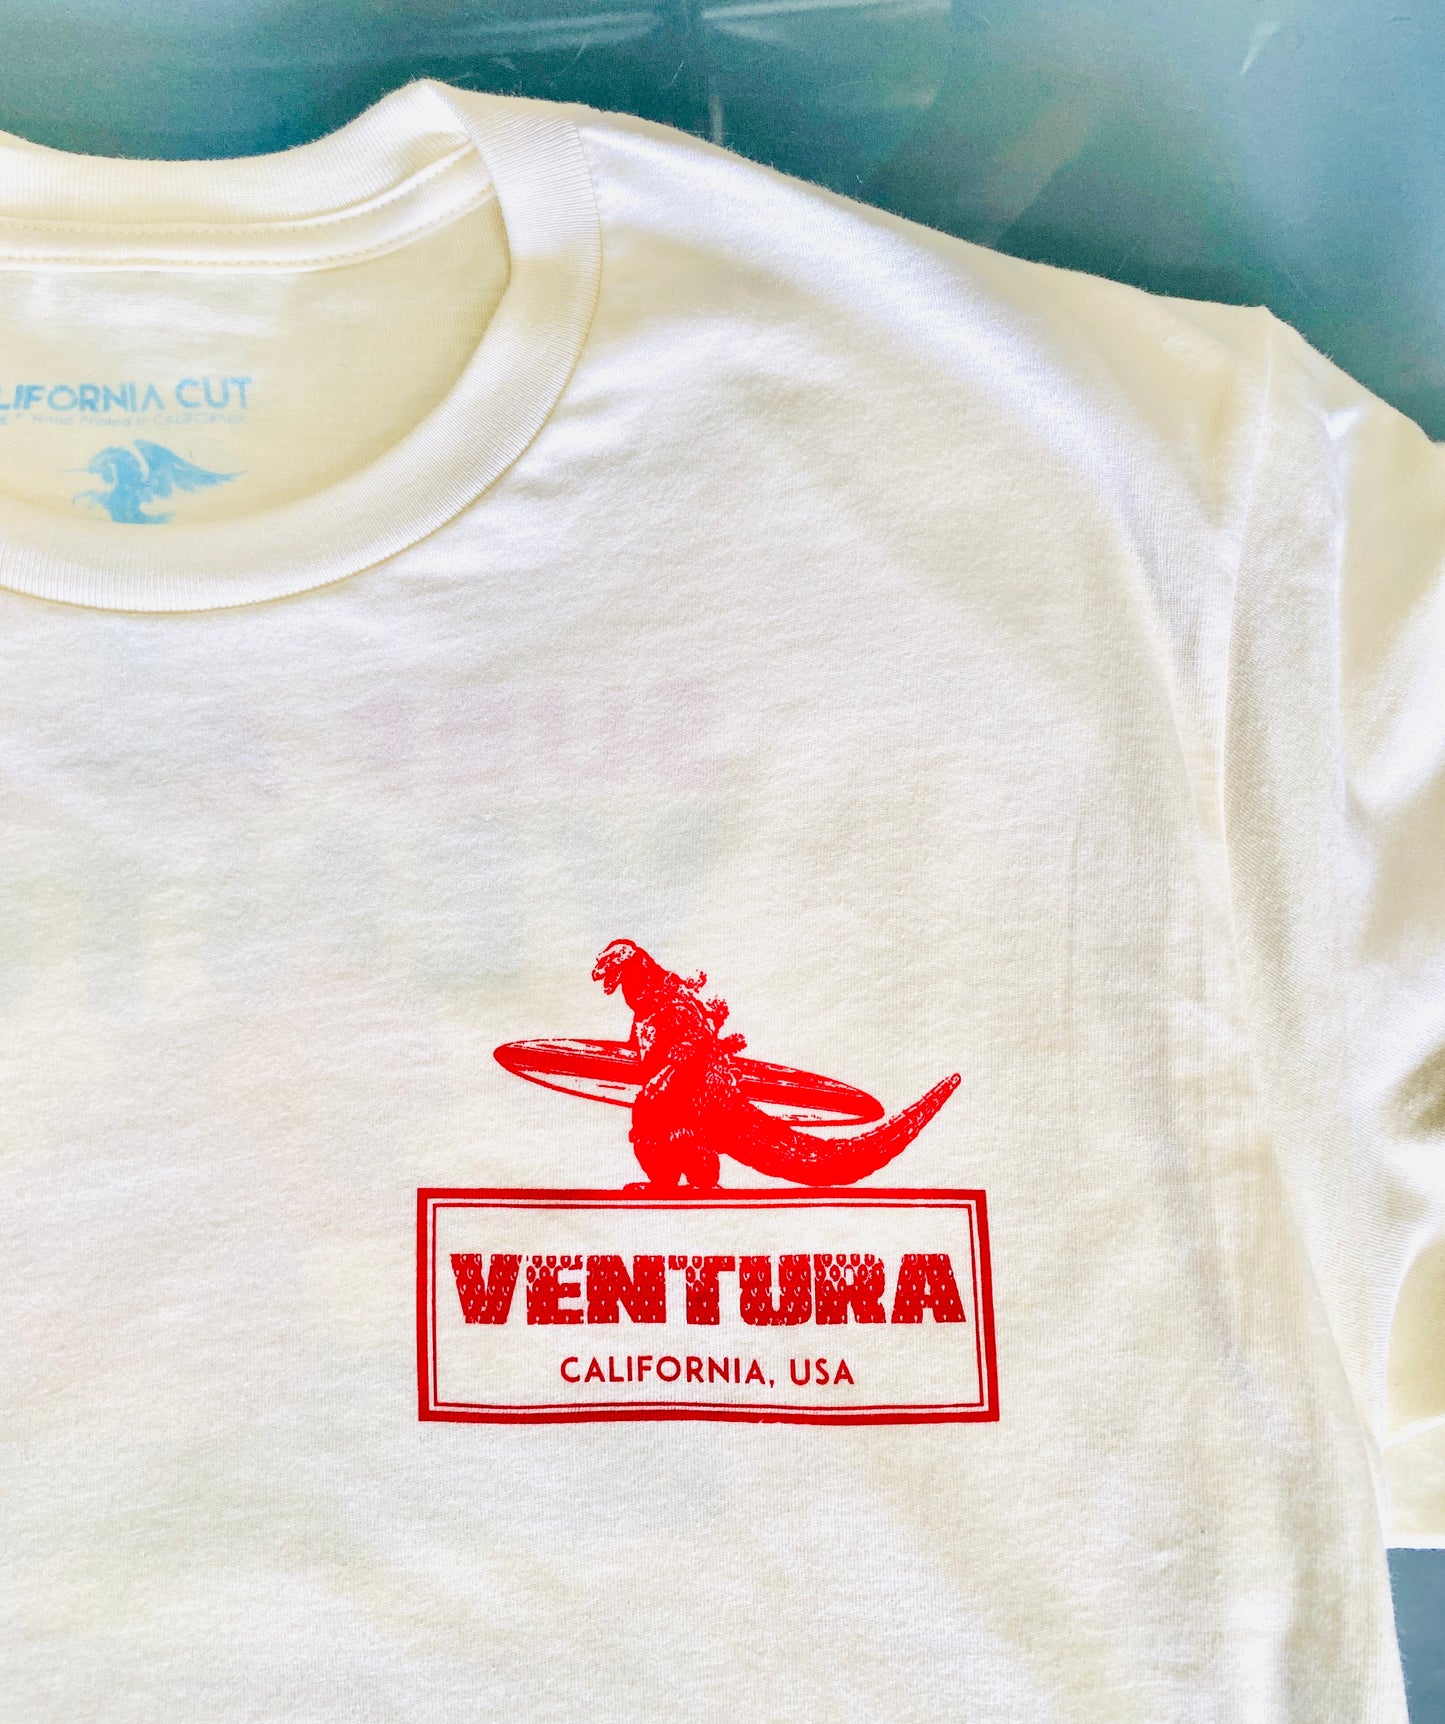 Surf & Berries Ventura Tshirt